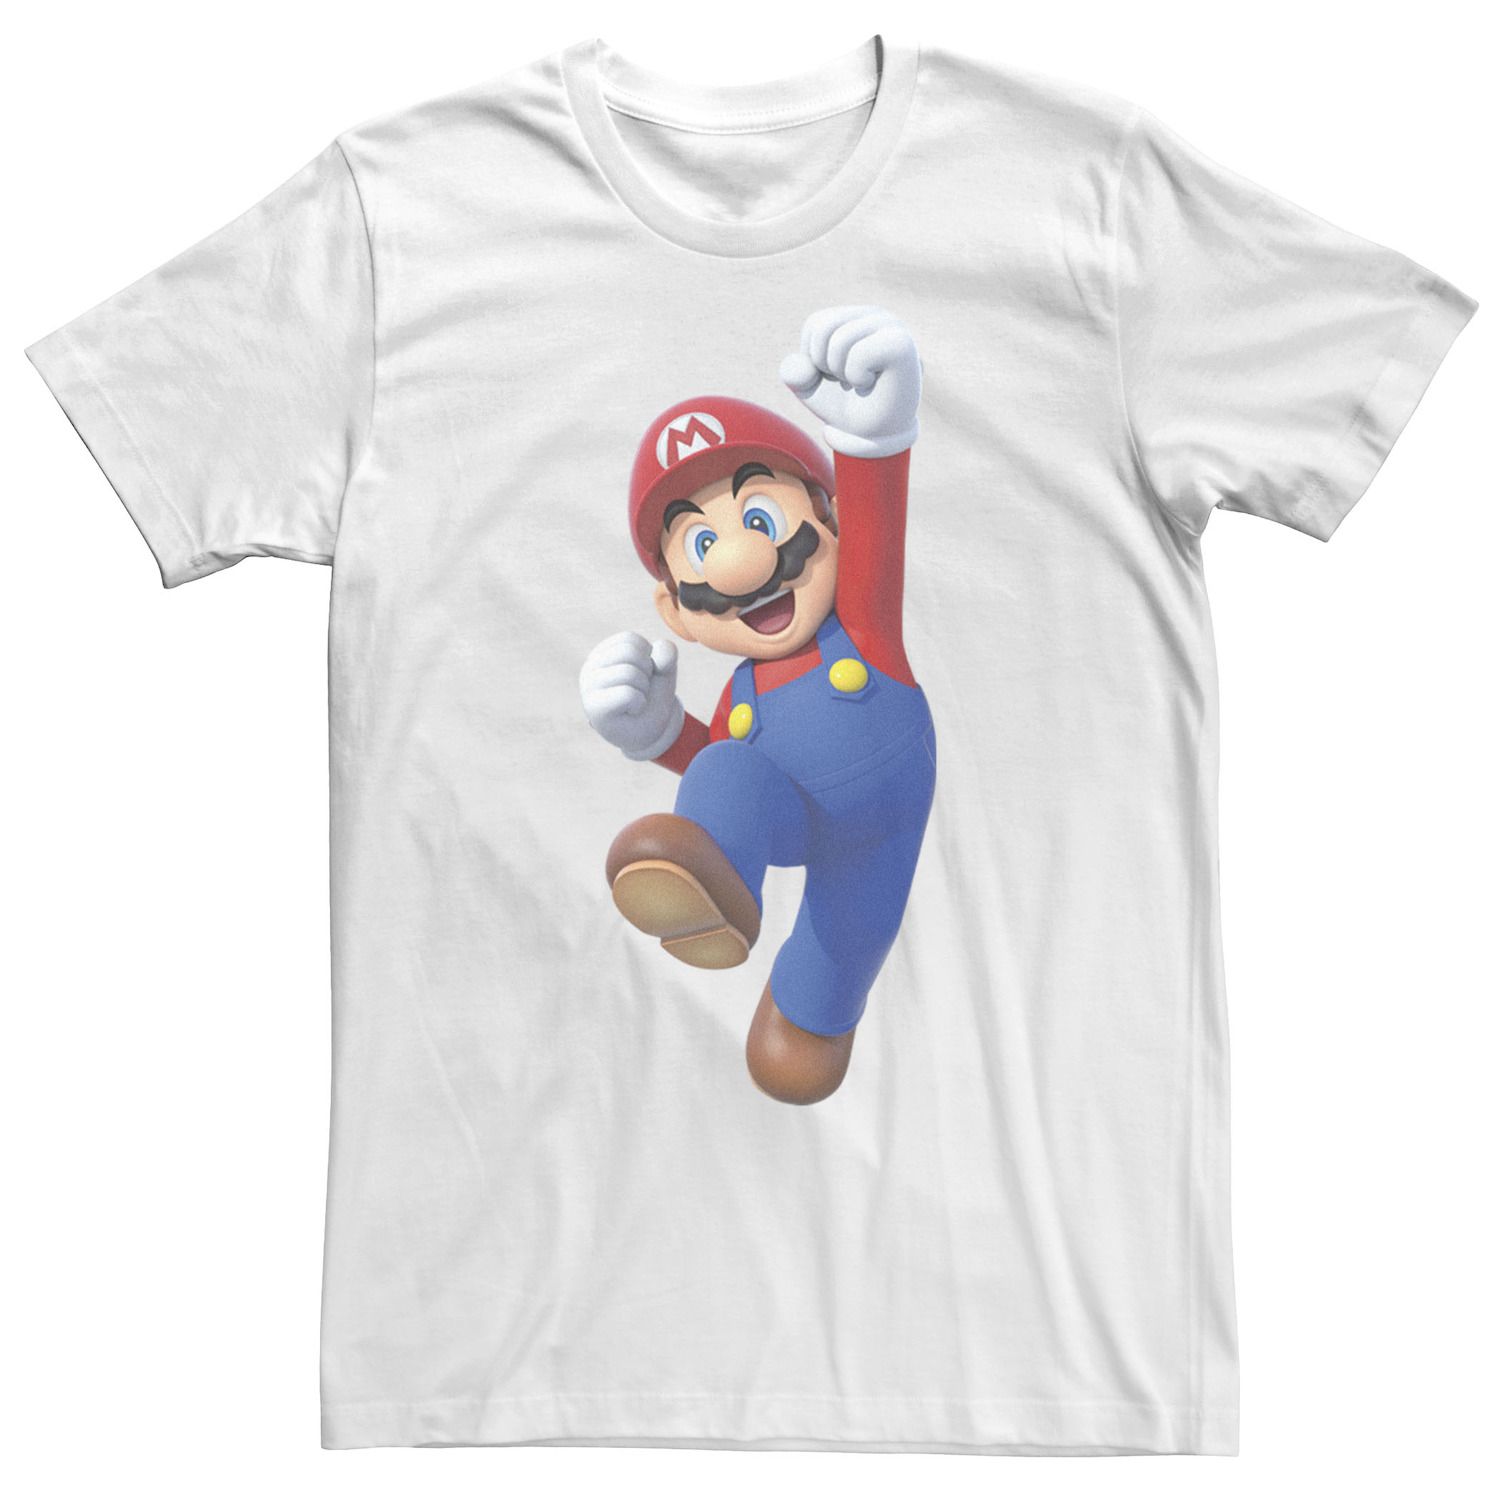 Мужская футболка Nintendo Super Bros. Mario Jumping с портретом Licensed Character фото